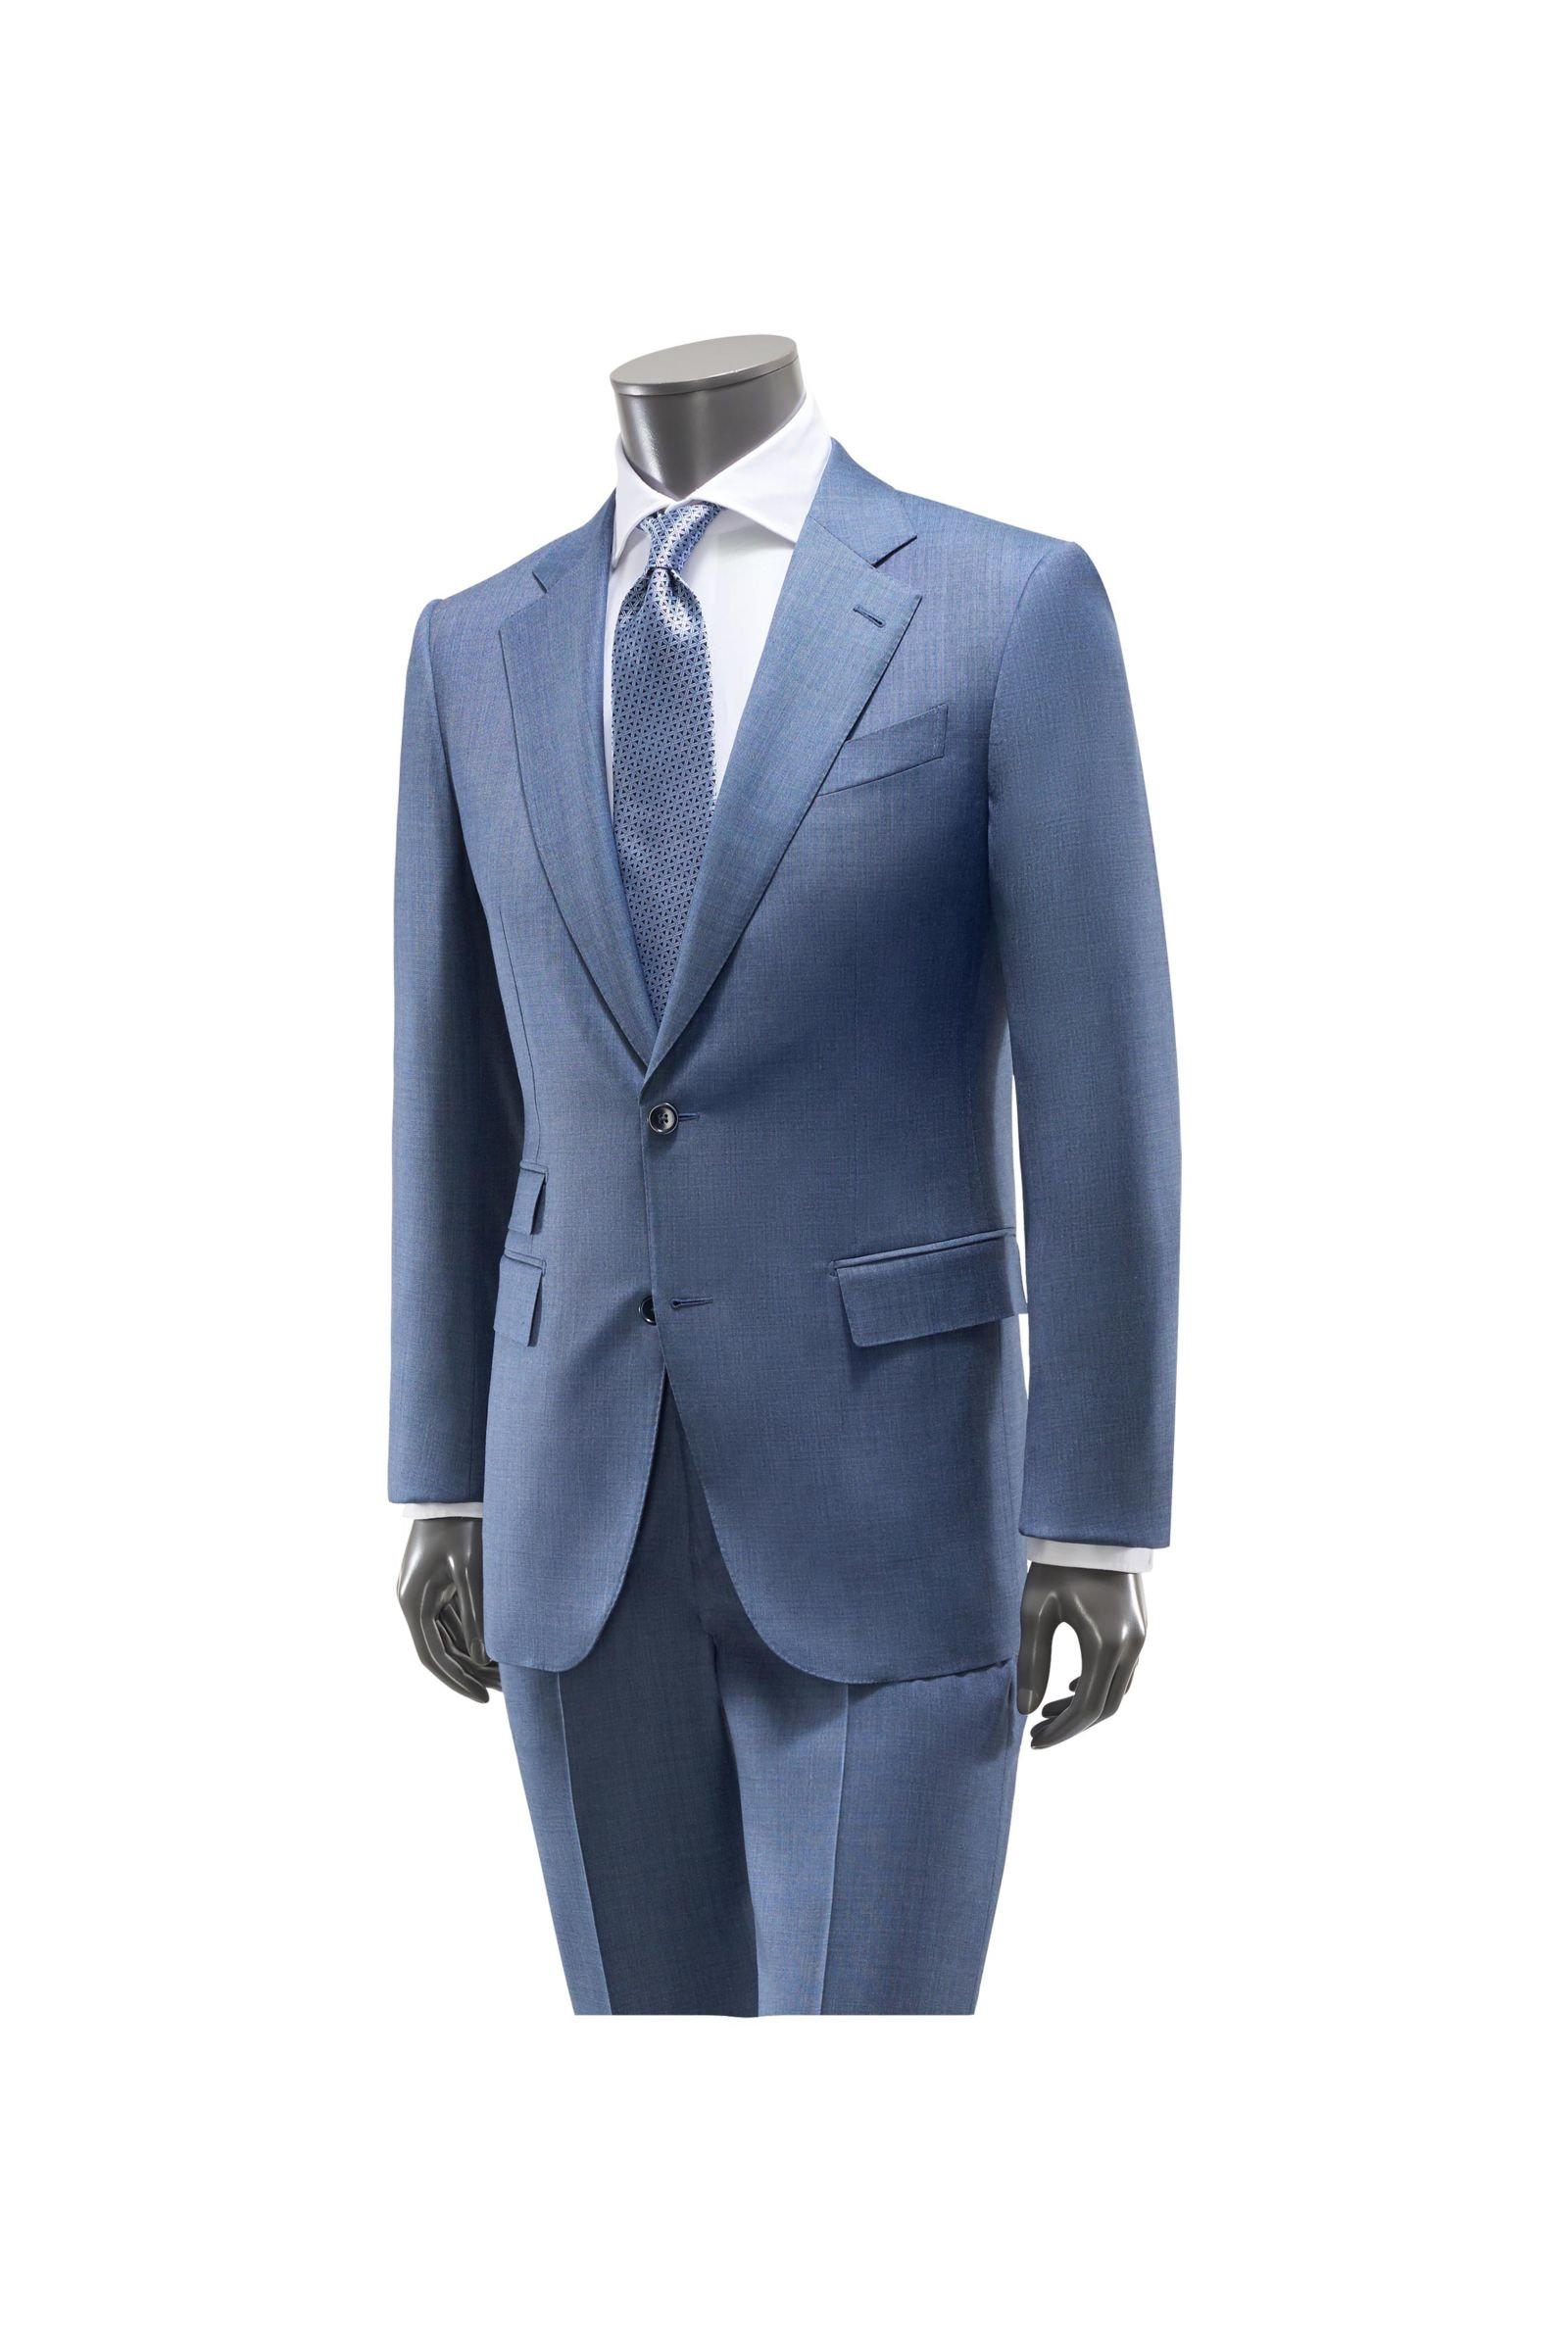 Suit 'Multiseason Manhattan slim fit' grey-blue